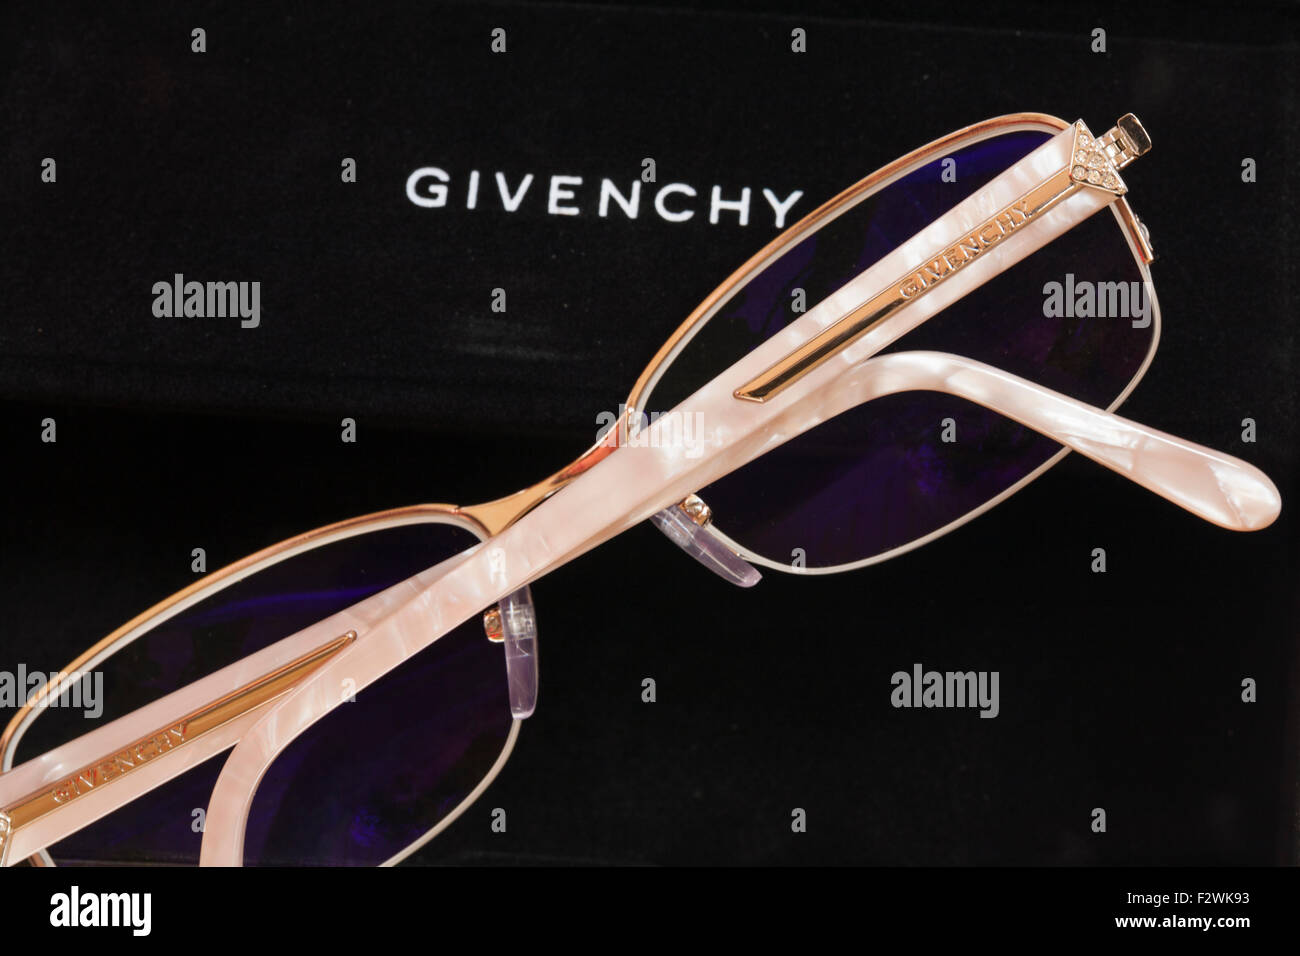 Diseñador de Givenchy gafas con lentes con recubrimiento para uso informático dando tinte azul descansando en caso negro Foto de stock